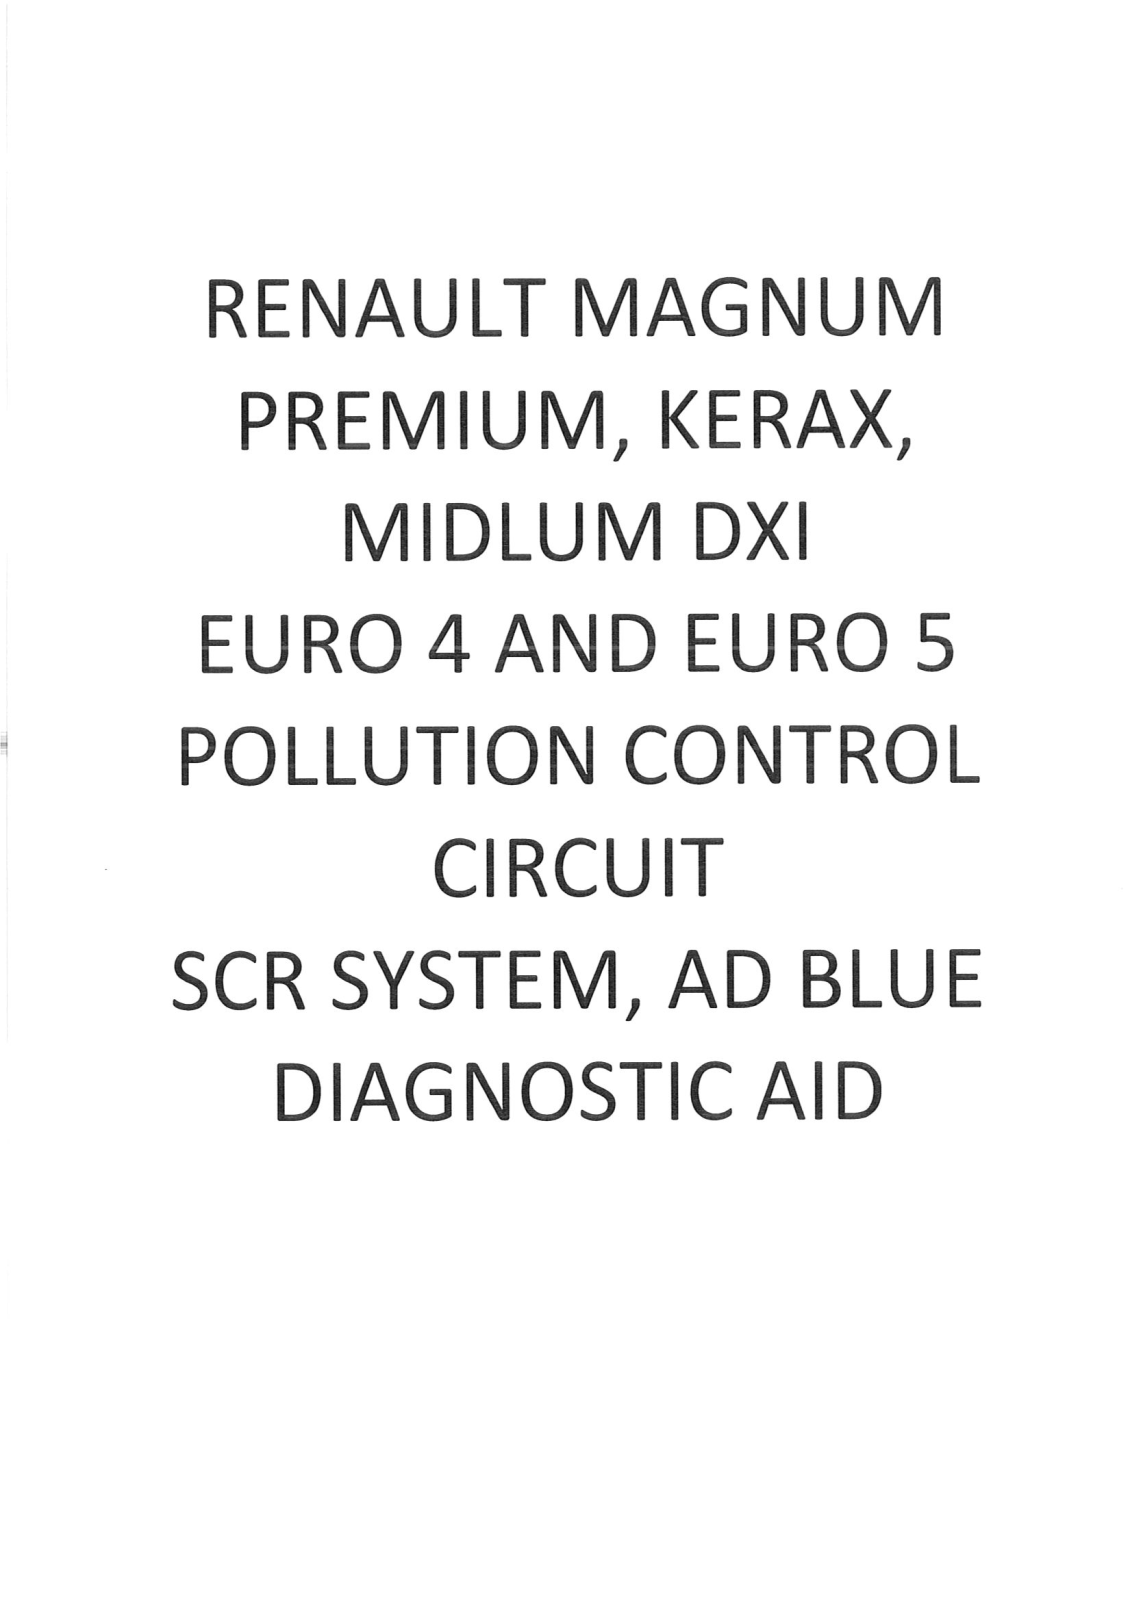 Renault Adblue Service Manuals